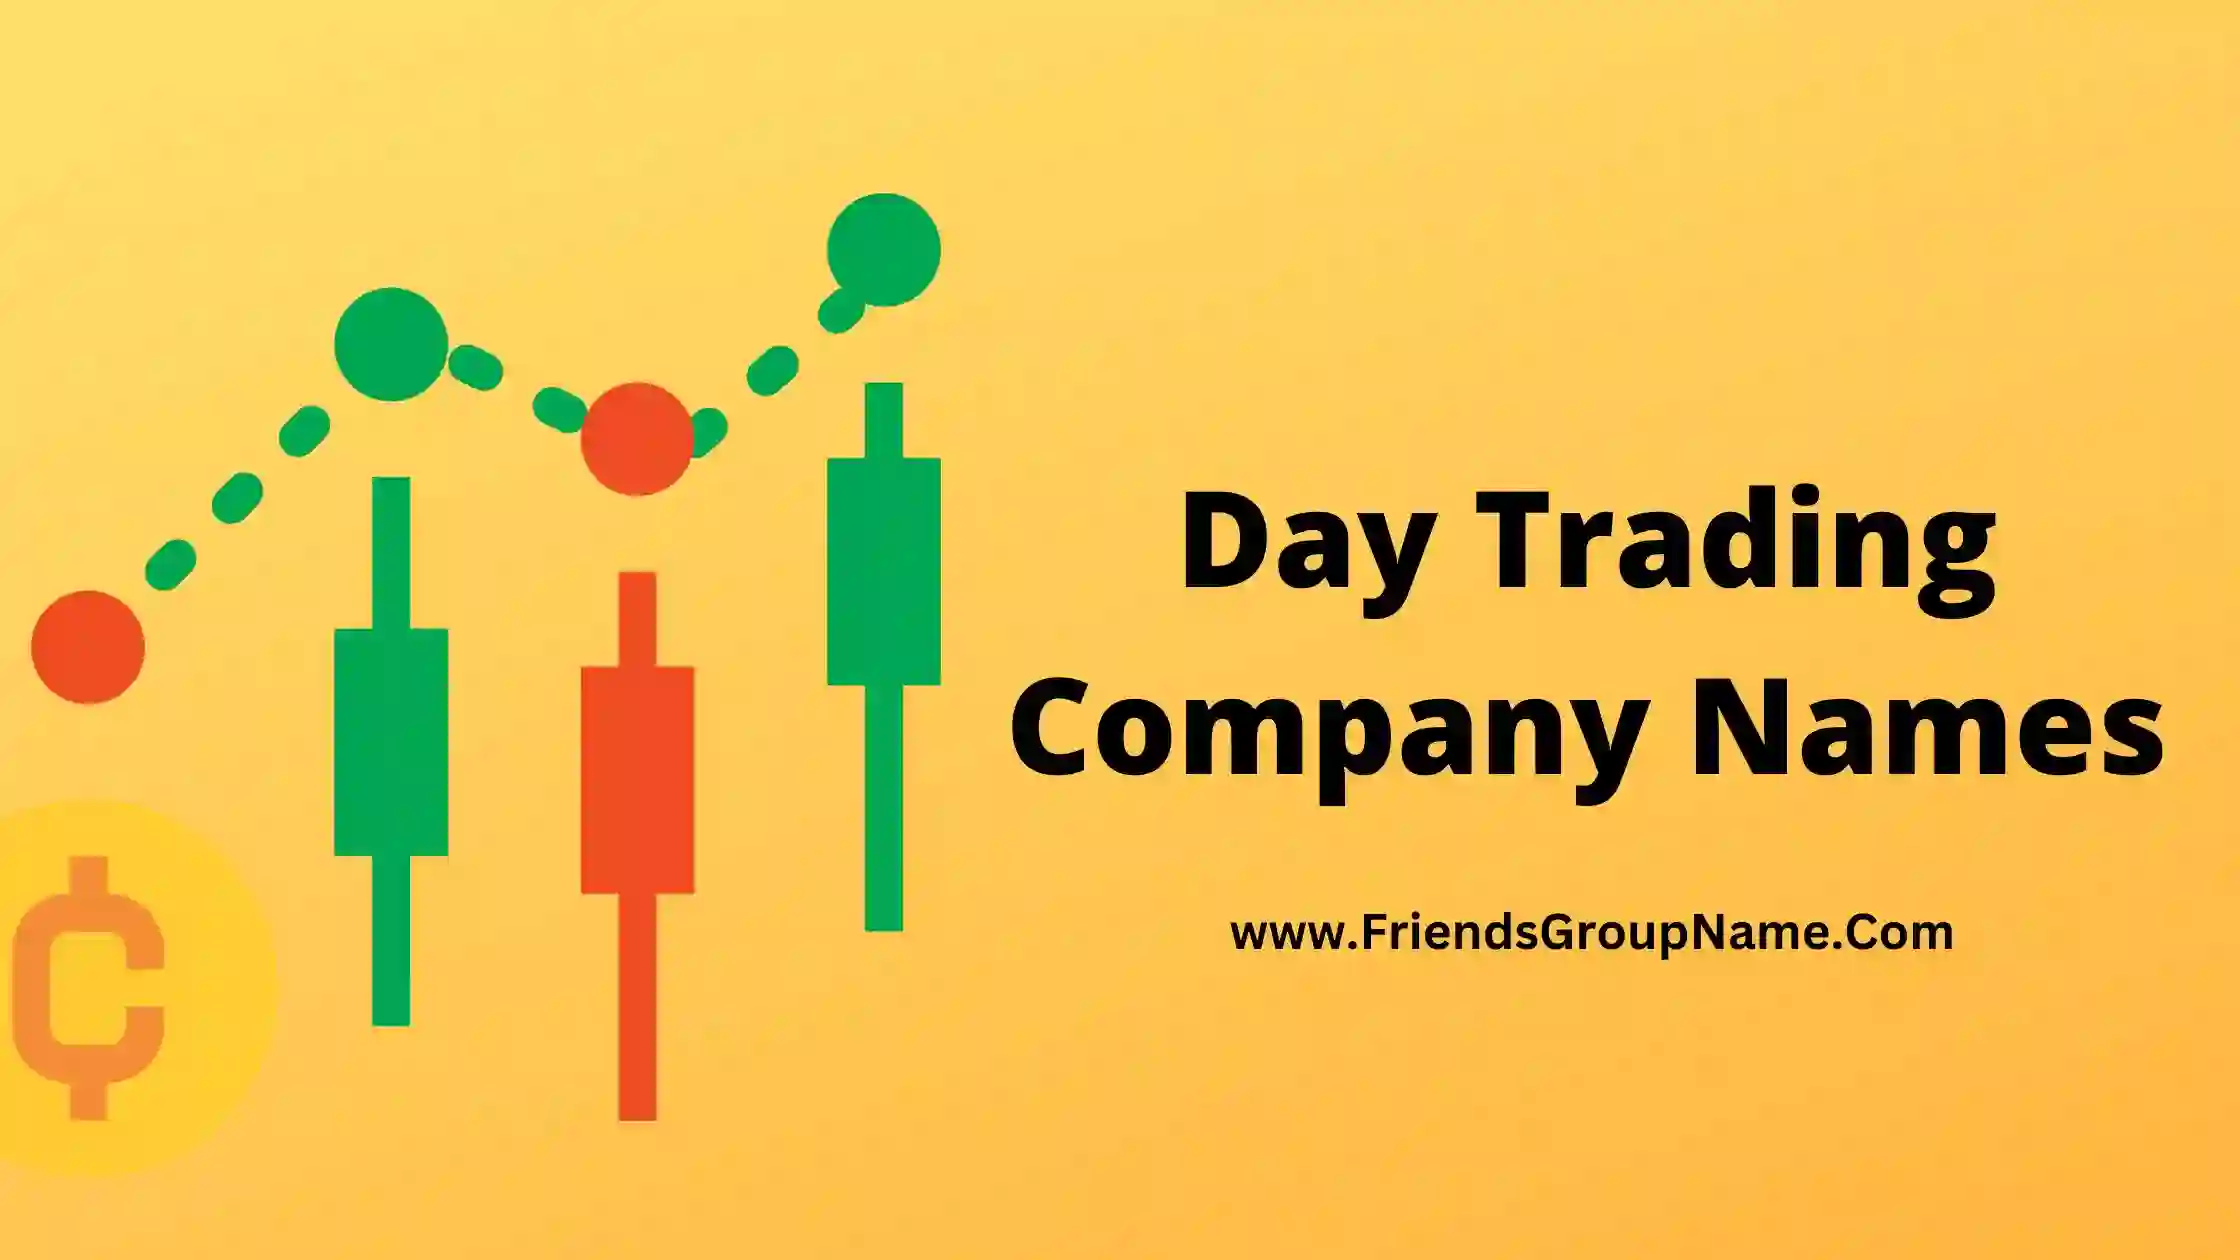 Day Trading Company Names